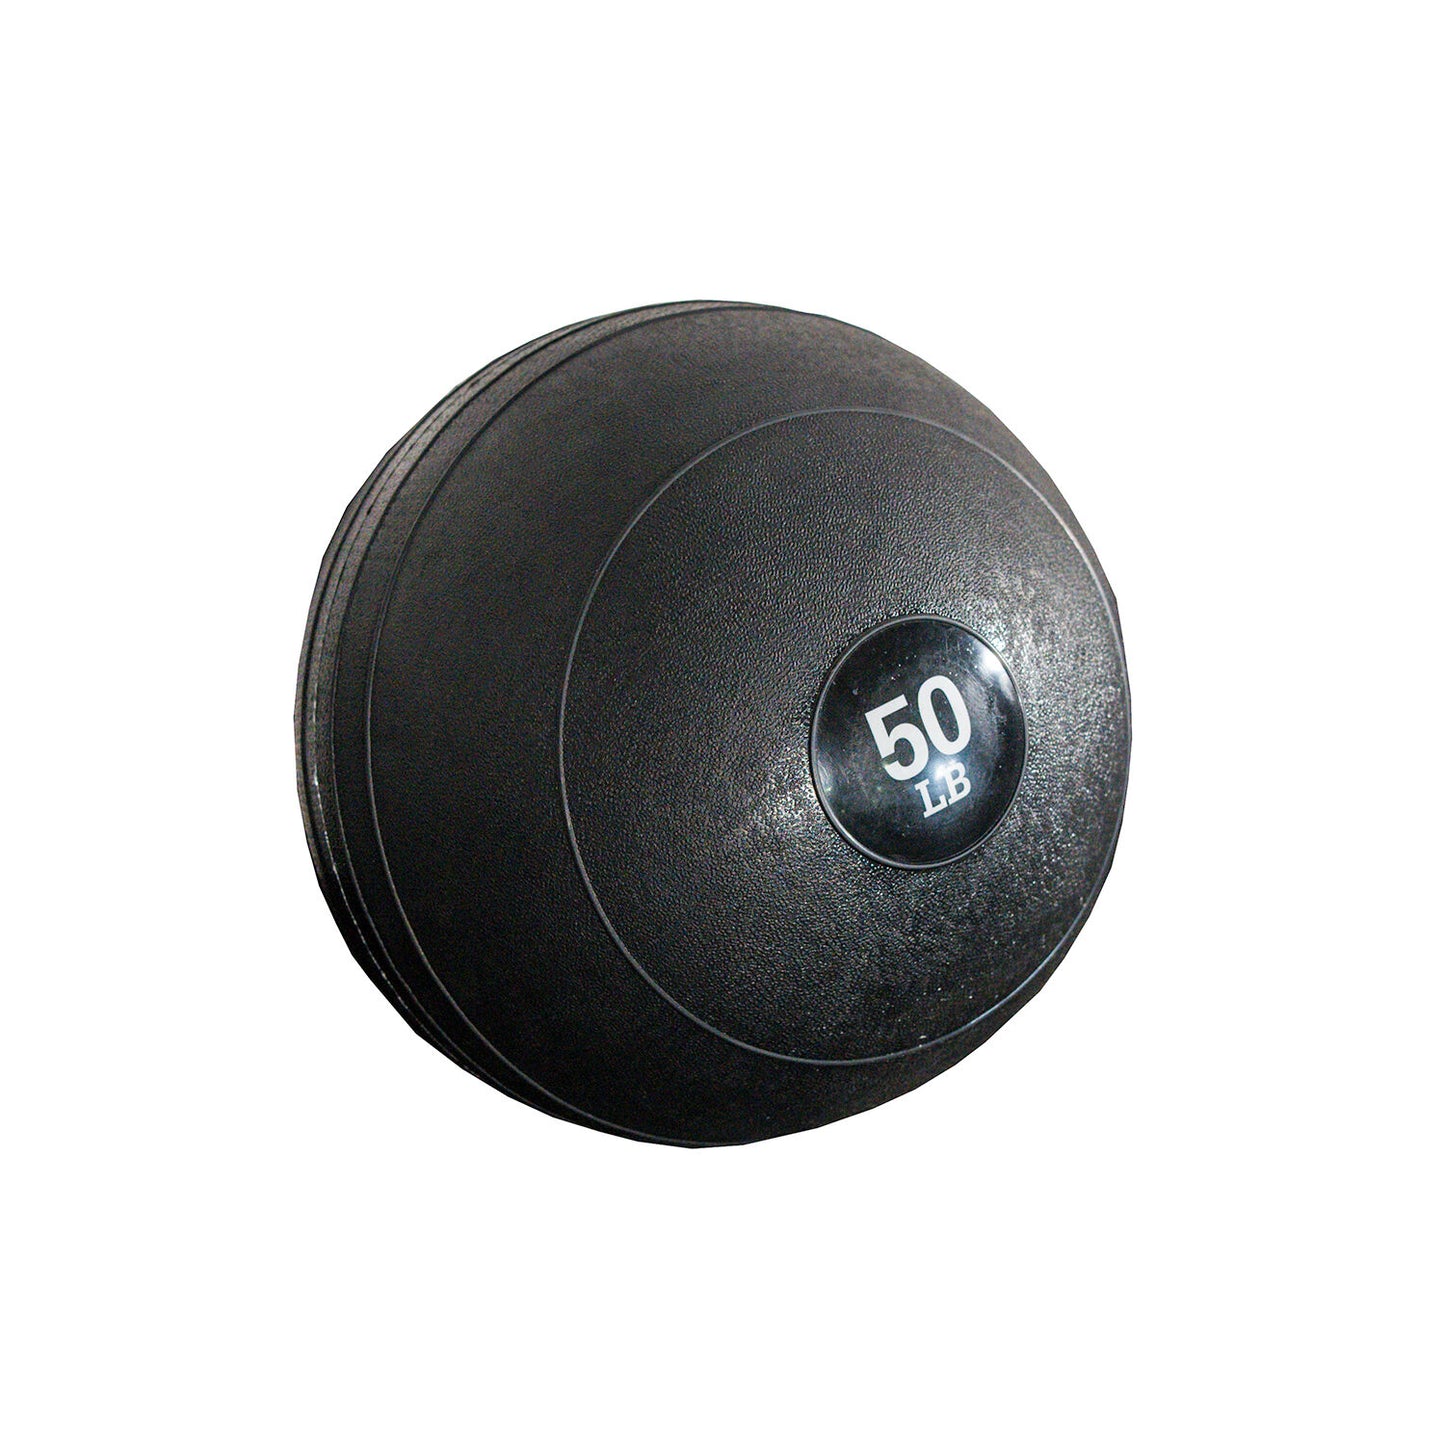 50 LB Rubber Slam Ball - view 1